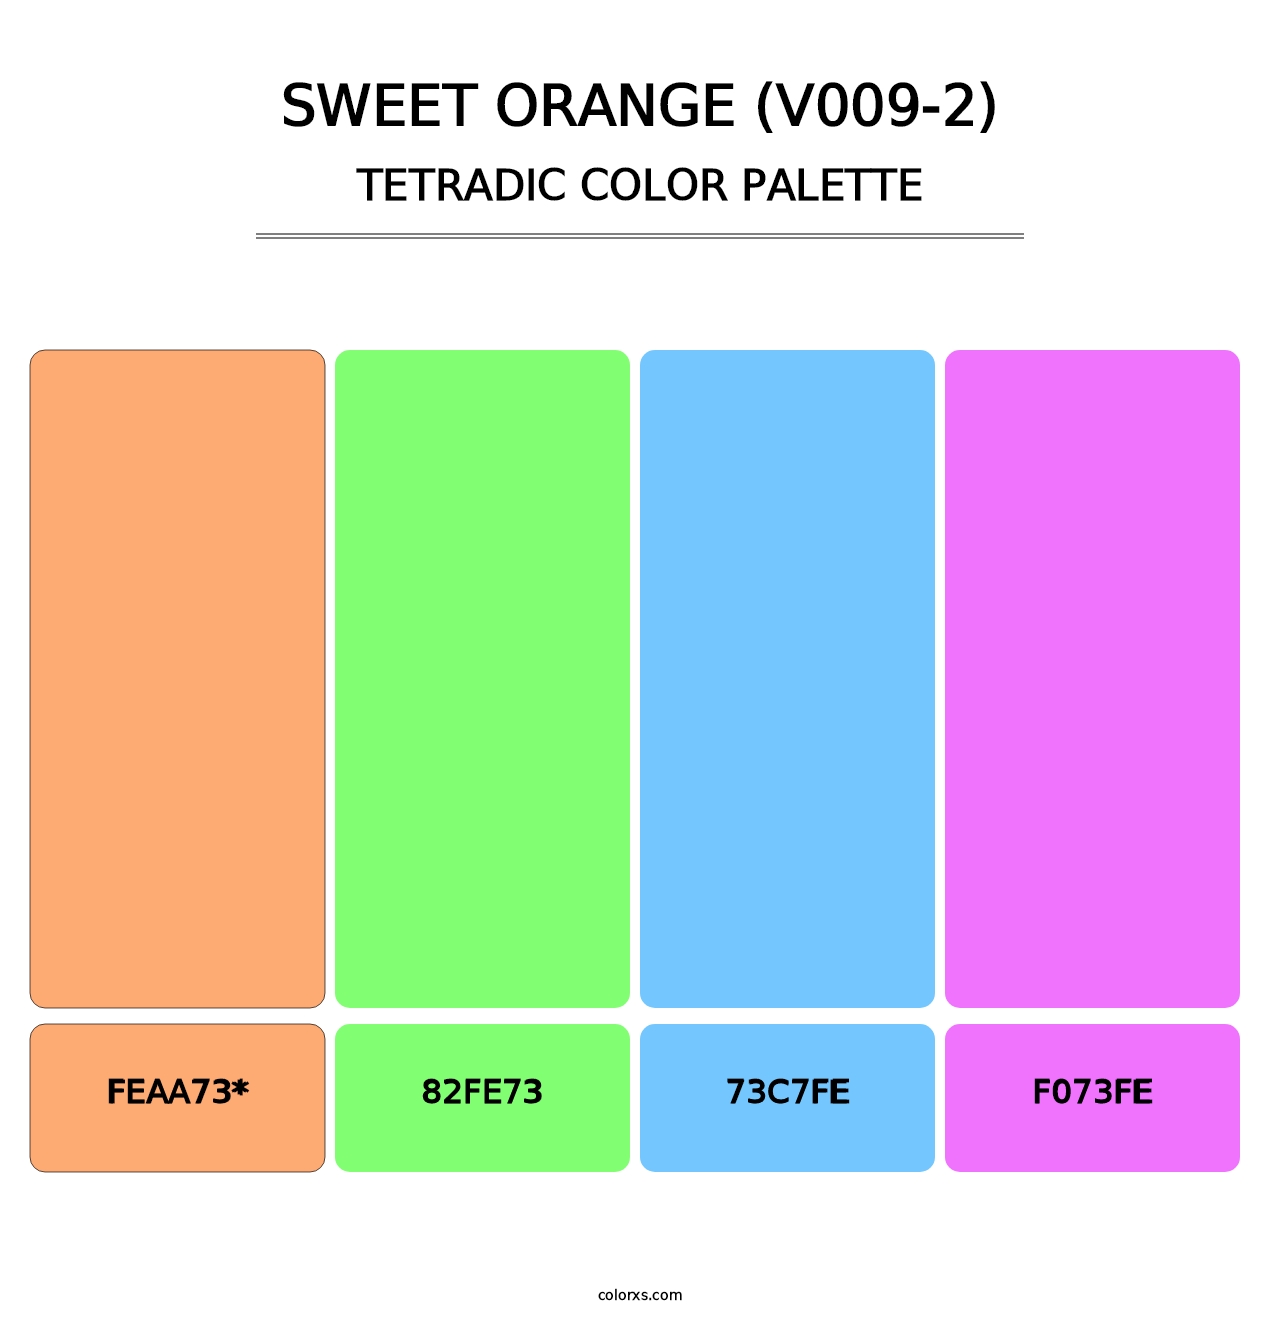 Sweet Orange (V009-2) - Tetradic Color Palette